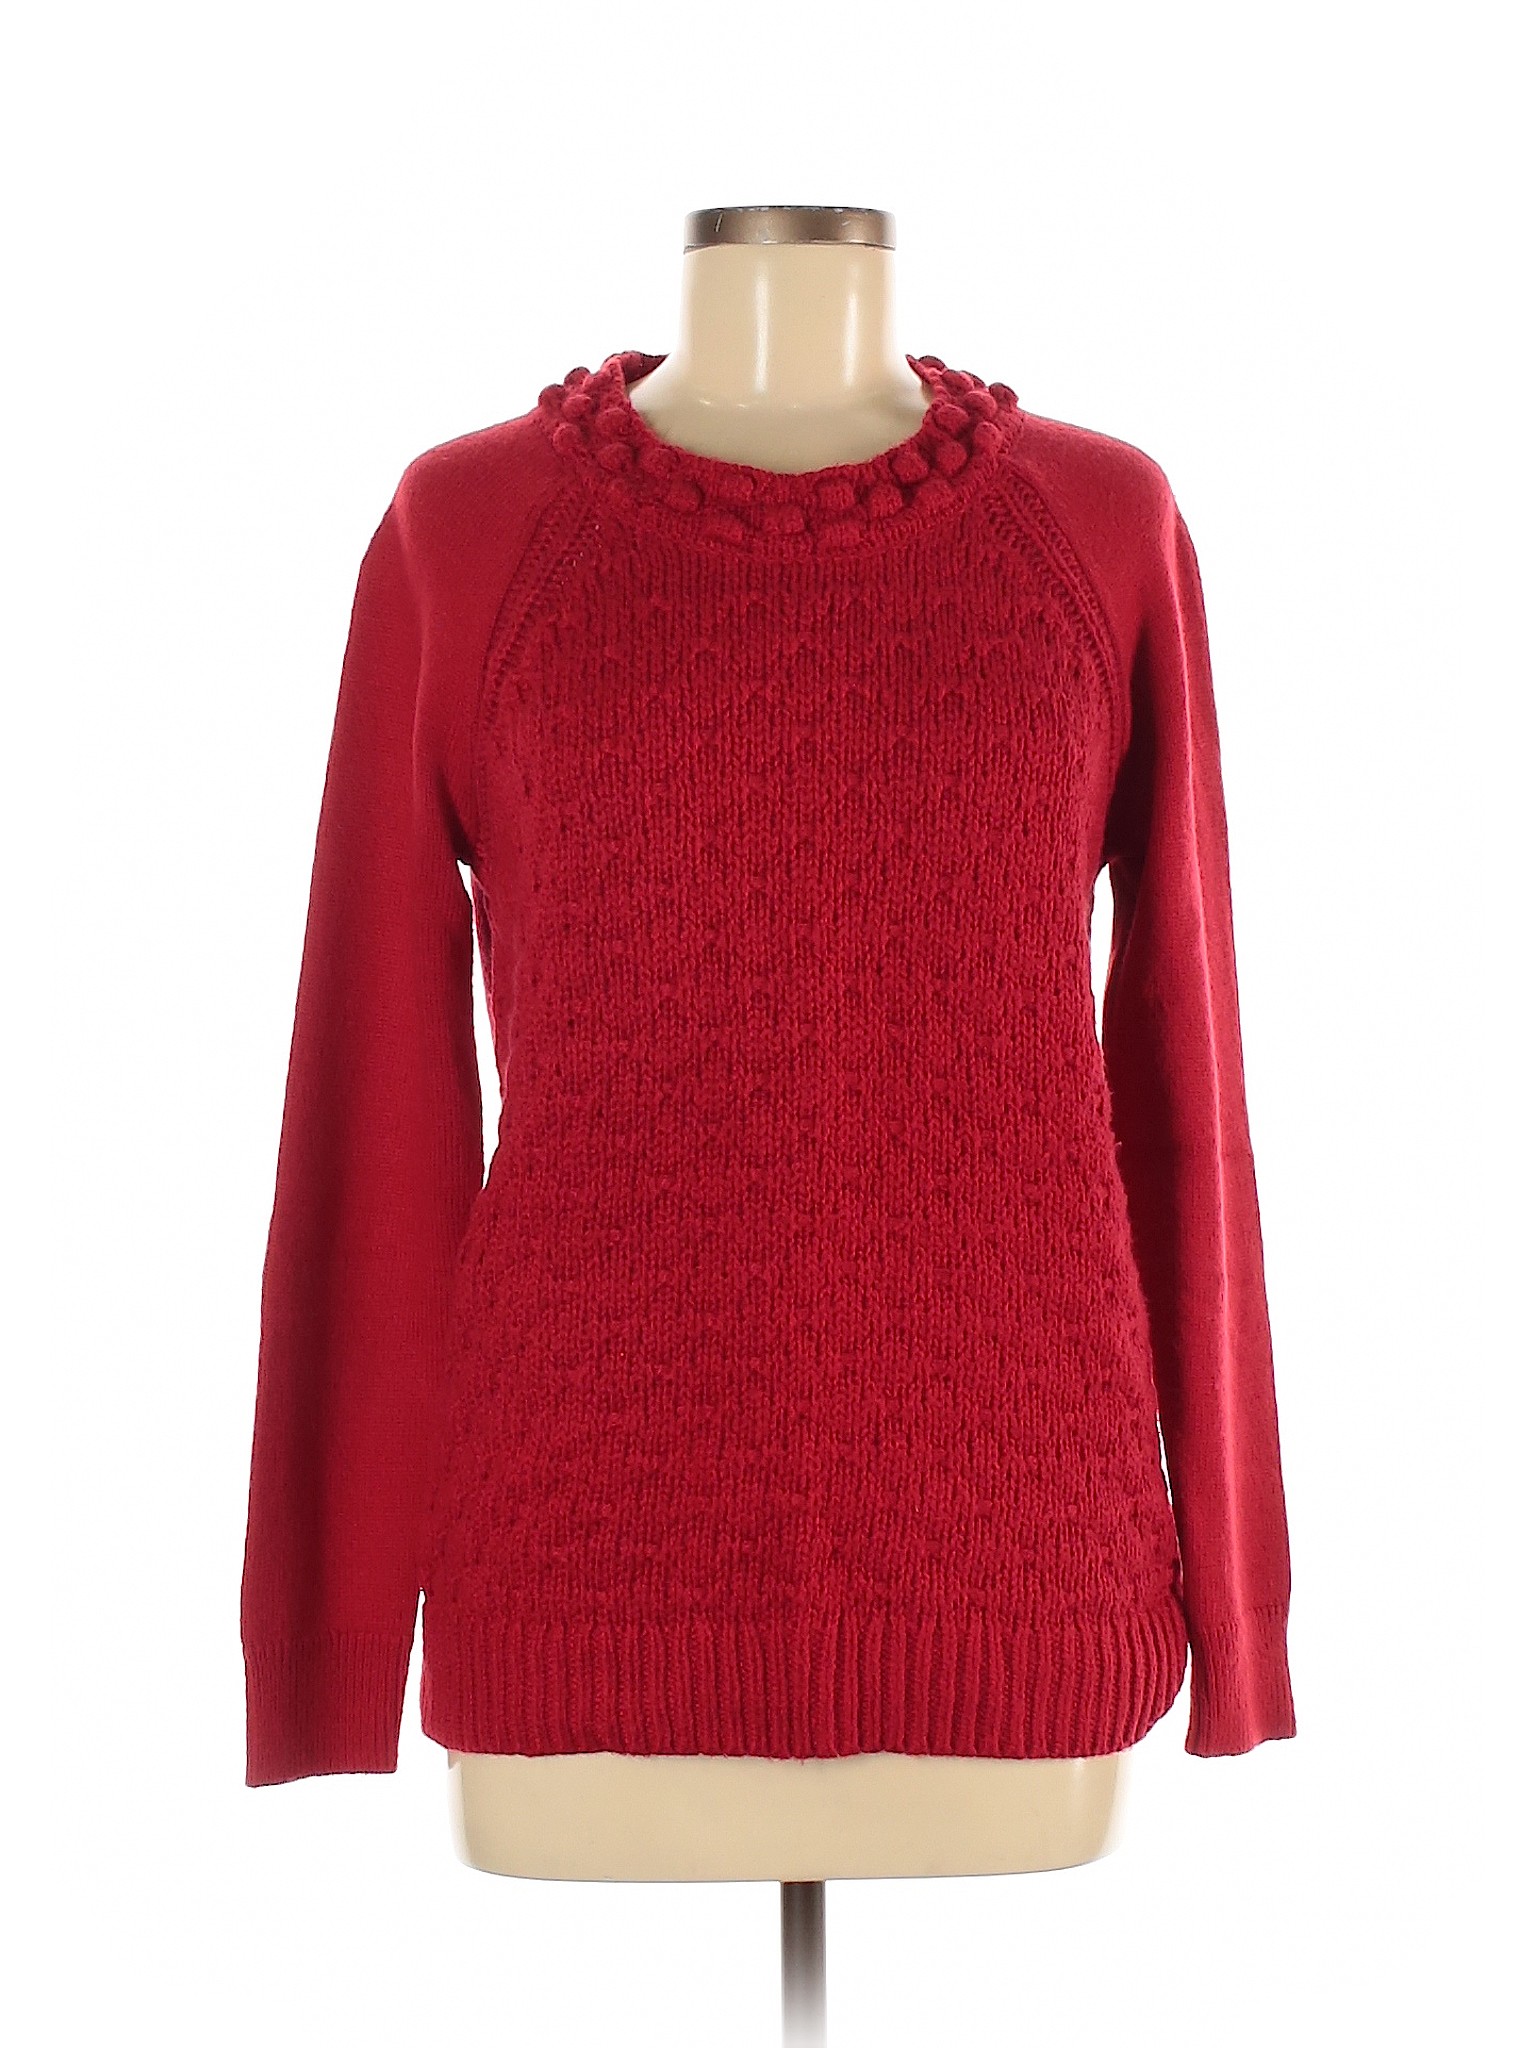 Ann Taylor LOFT Outlet Women Red Pullover Sweater M | eBay